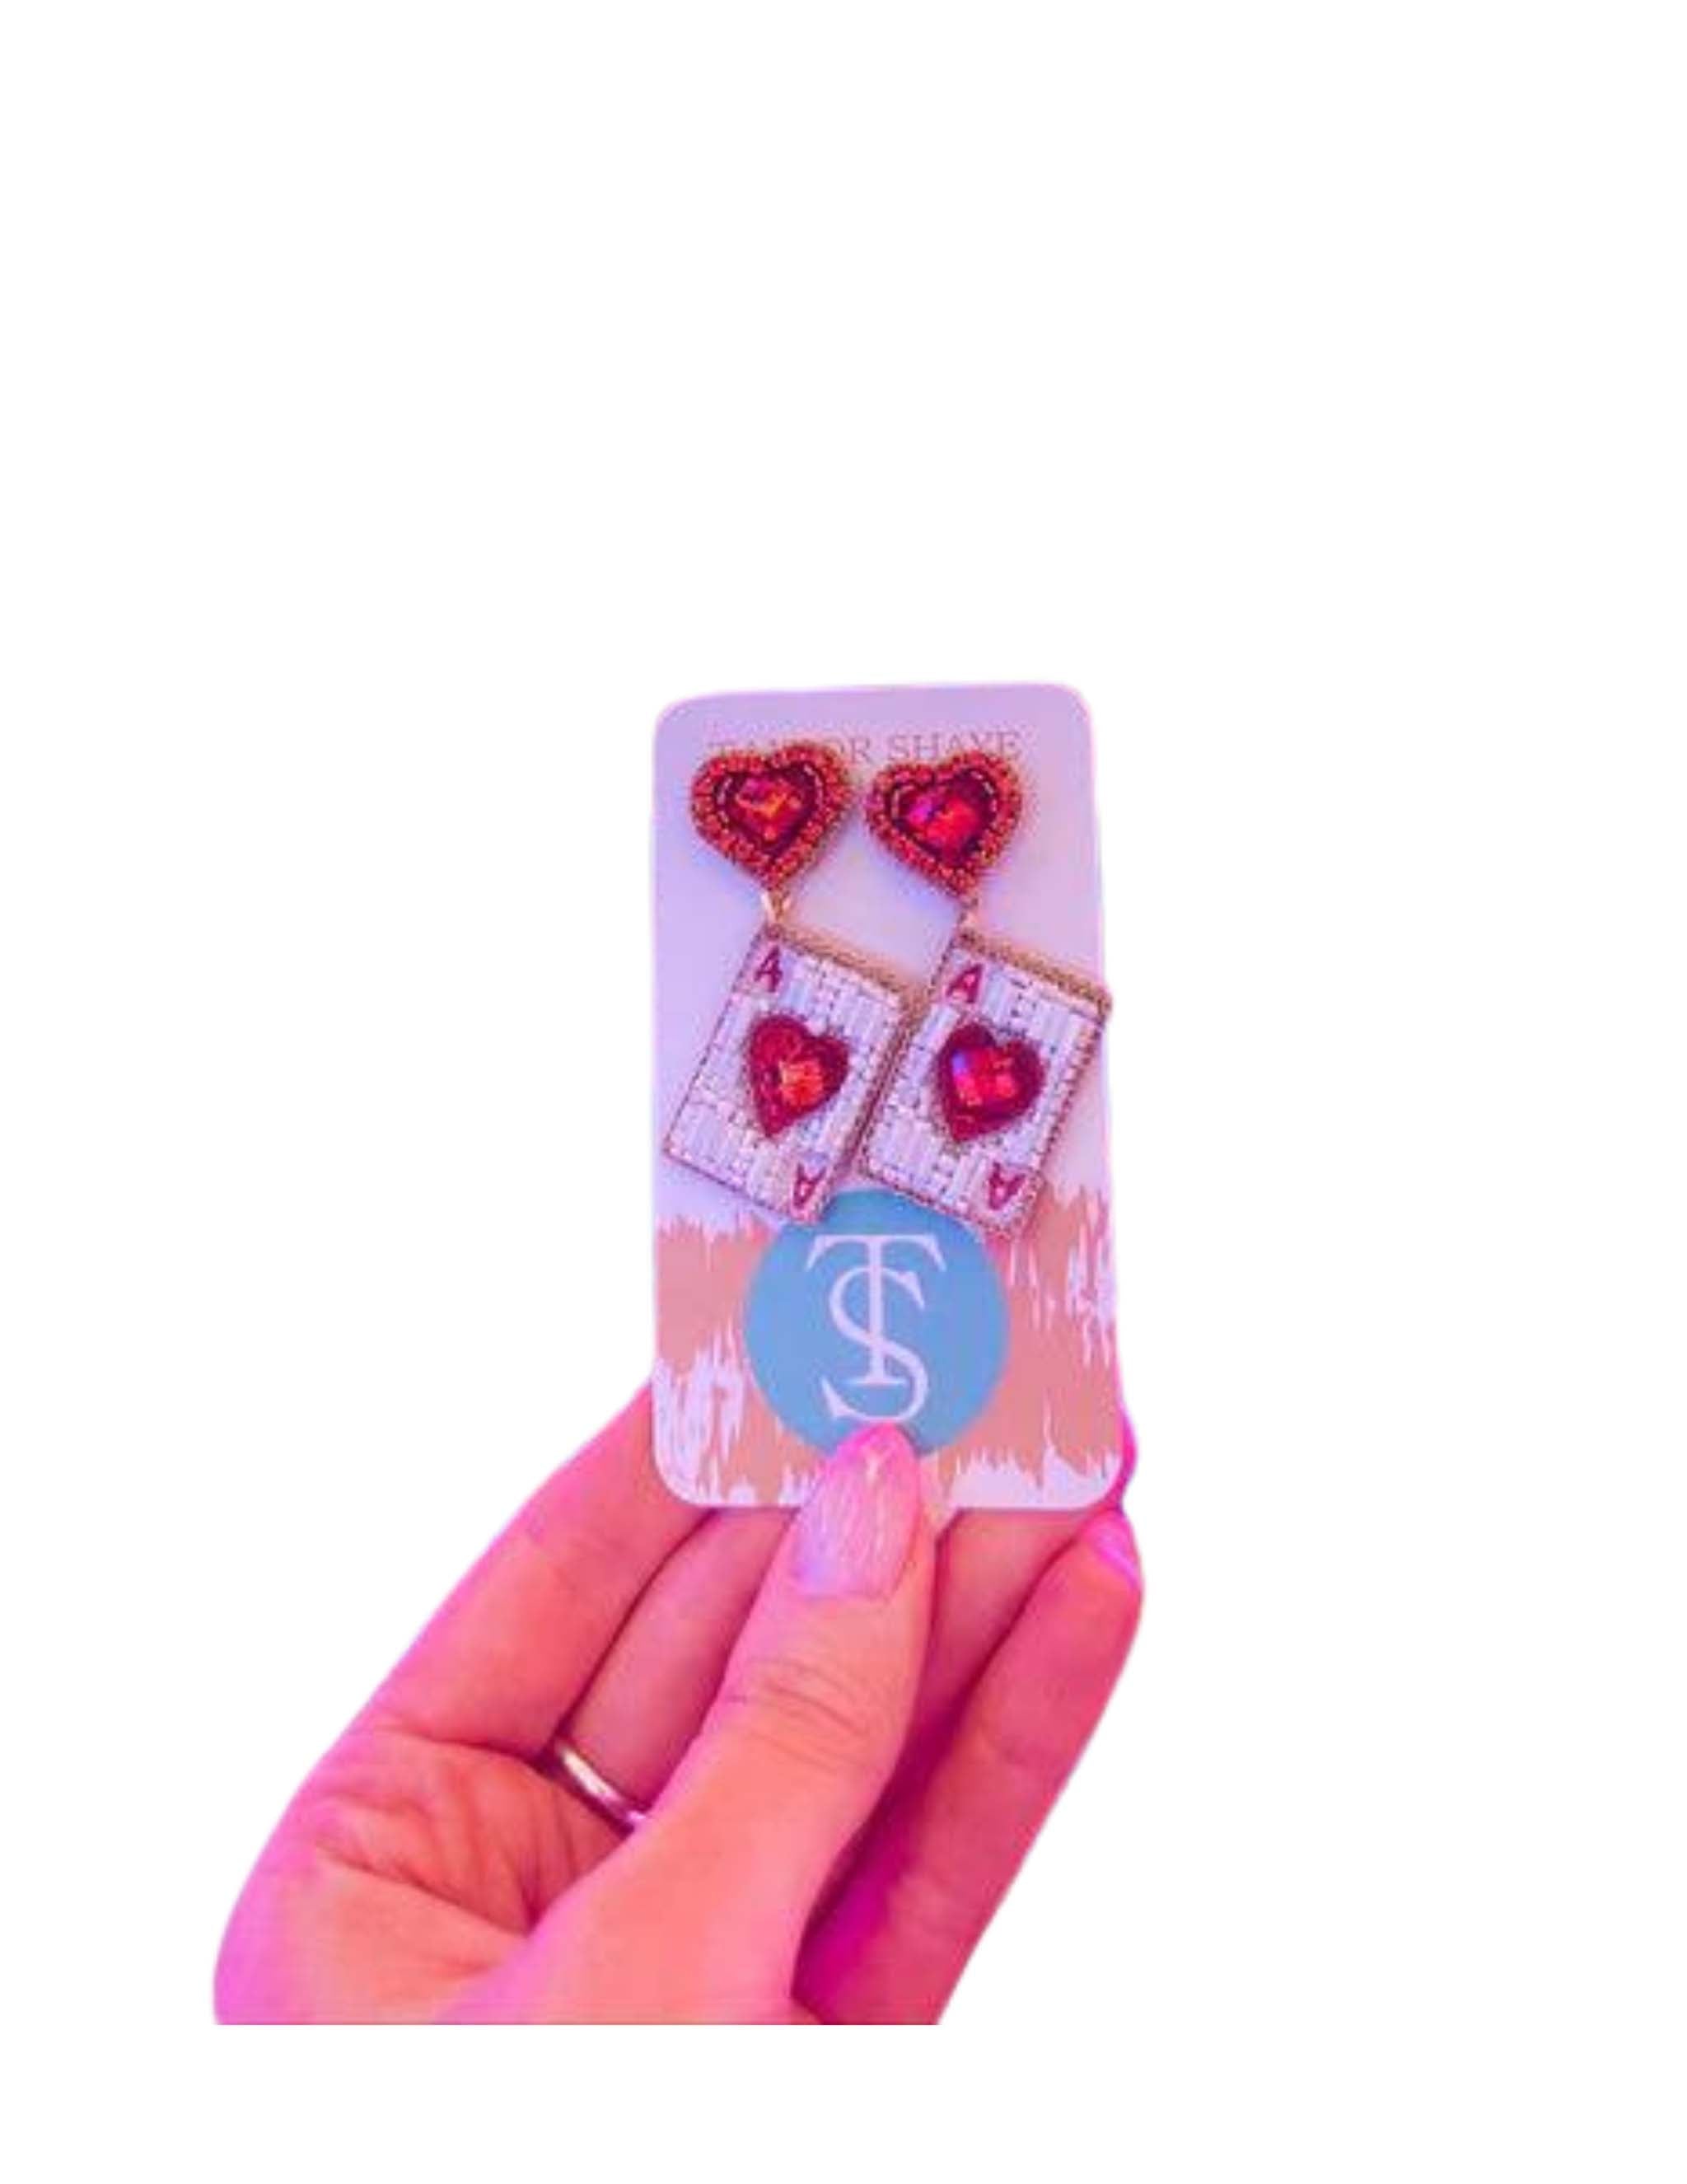 Ace of Hearts Card Beaded Earrings